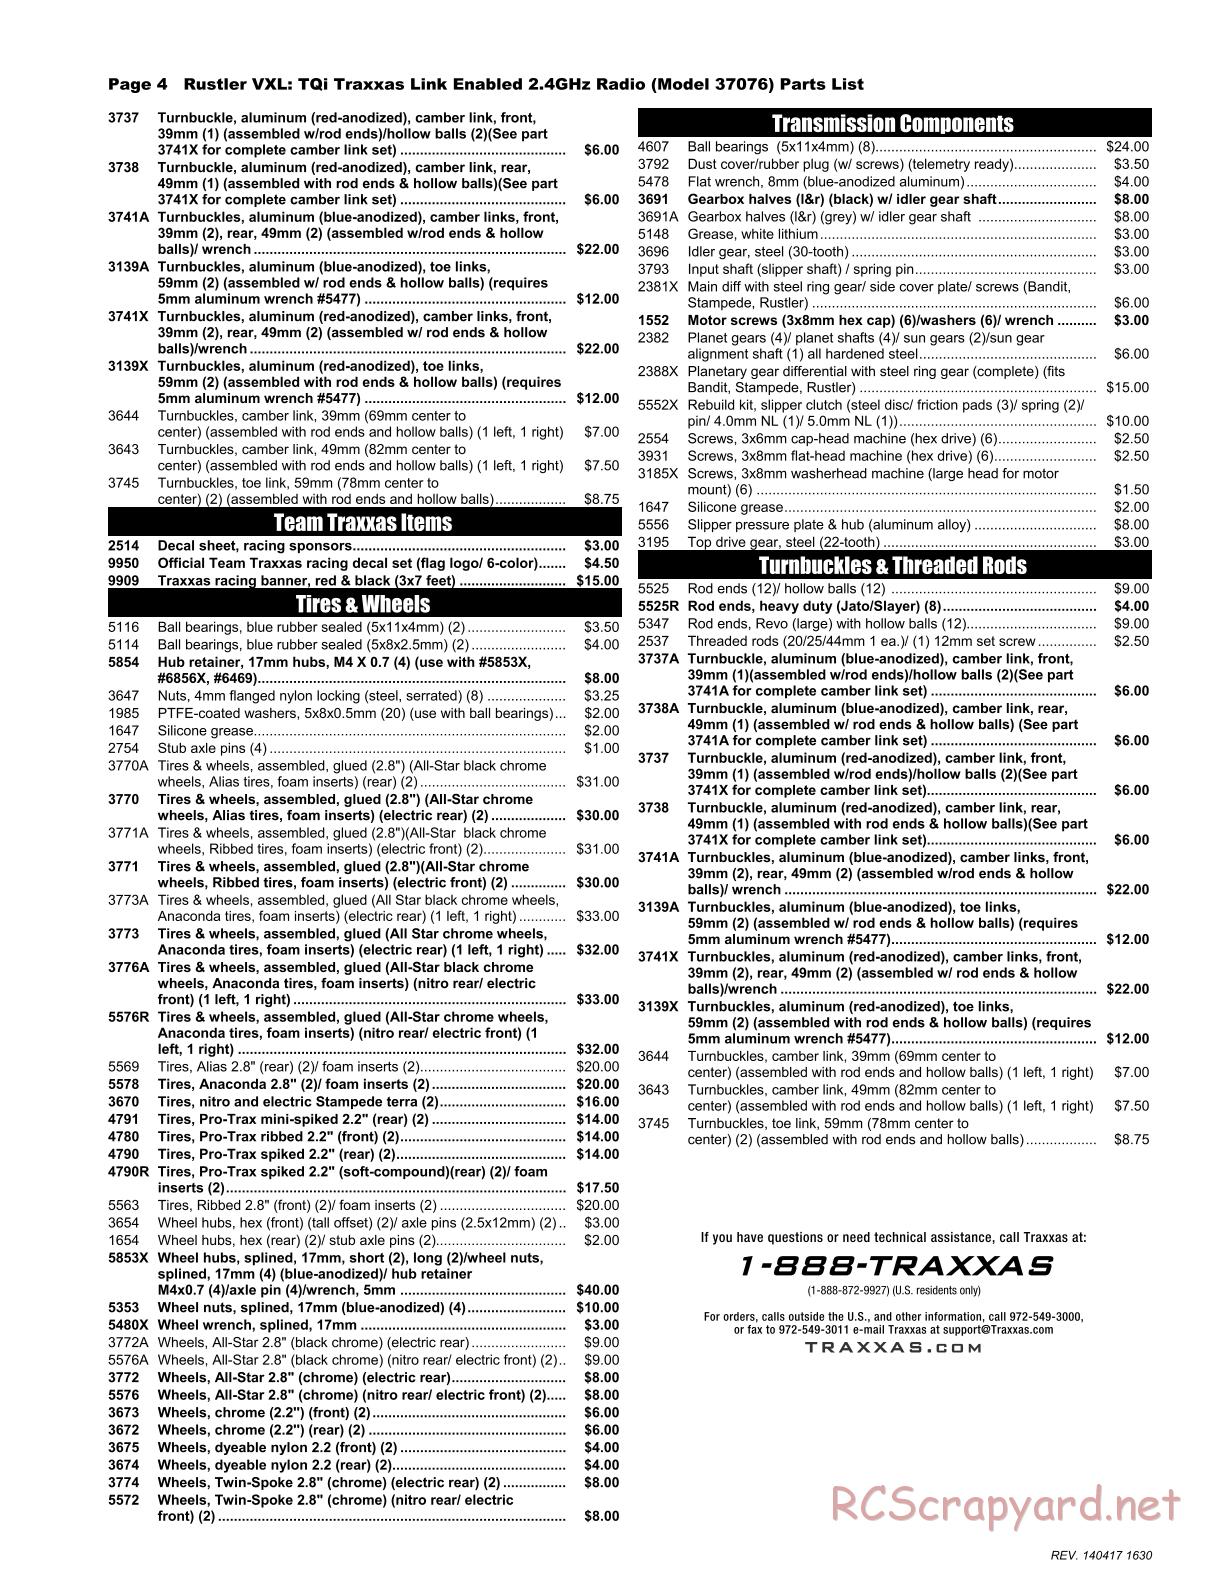 Traxxas - Rustler VXL (2014) - Parts List - Page 4